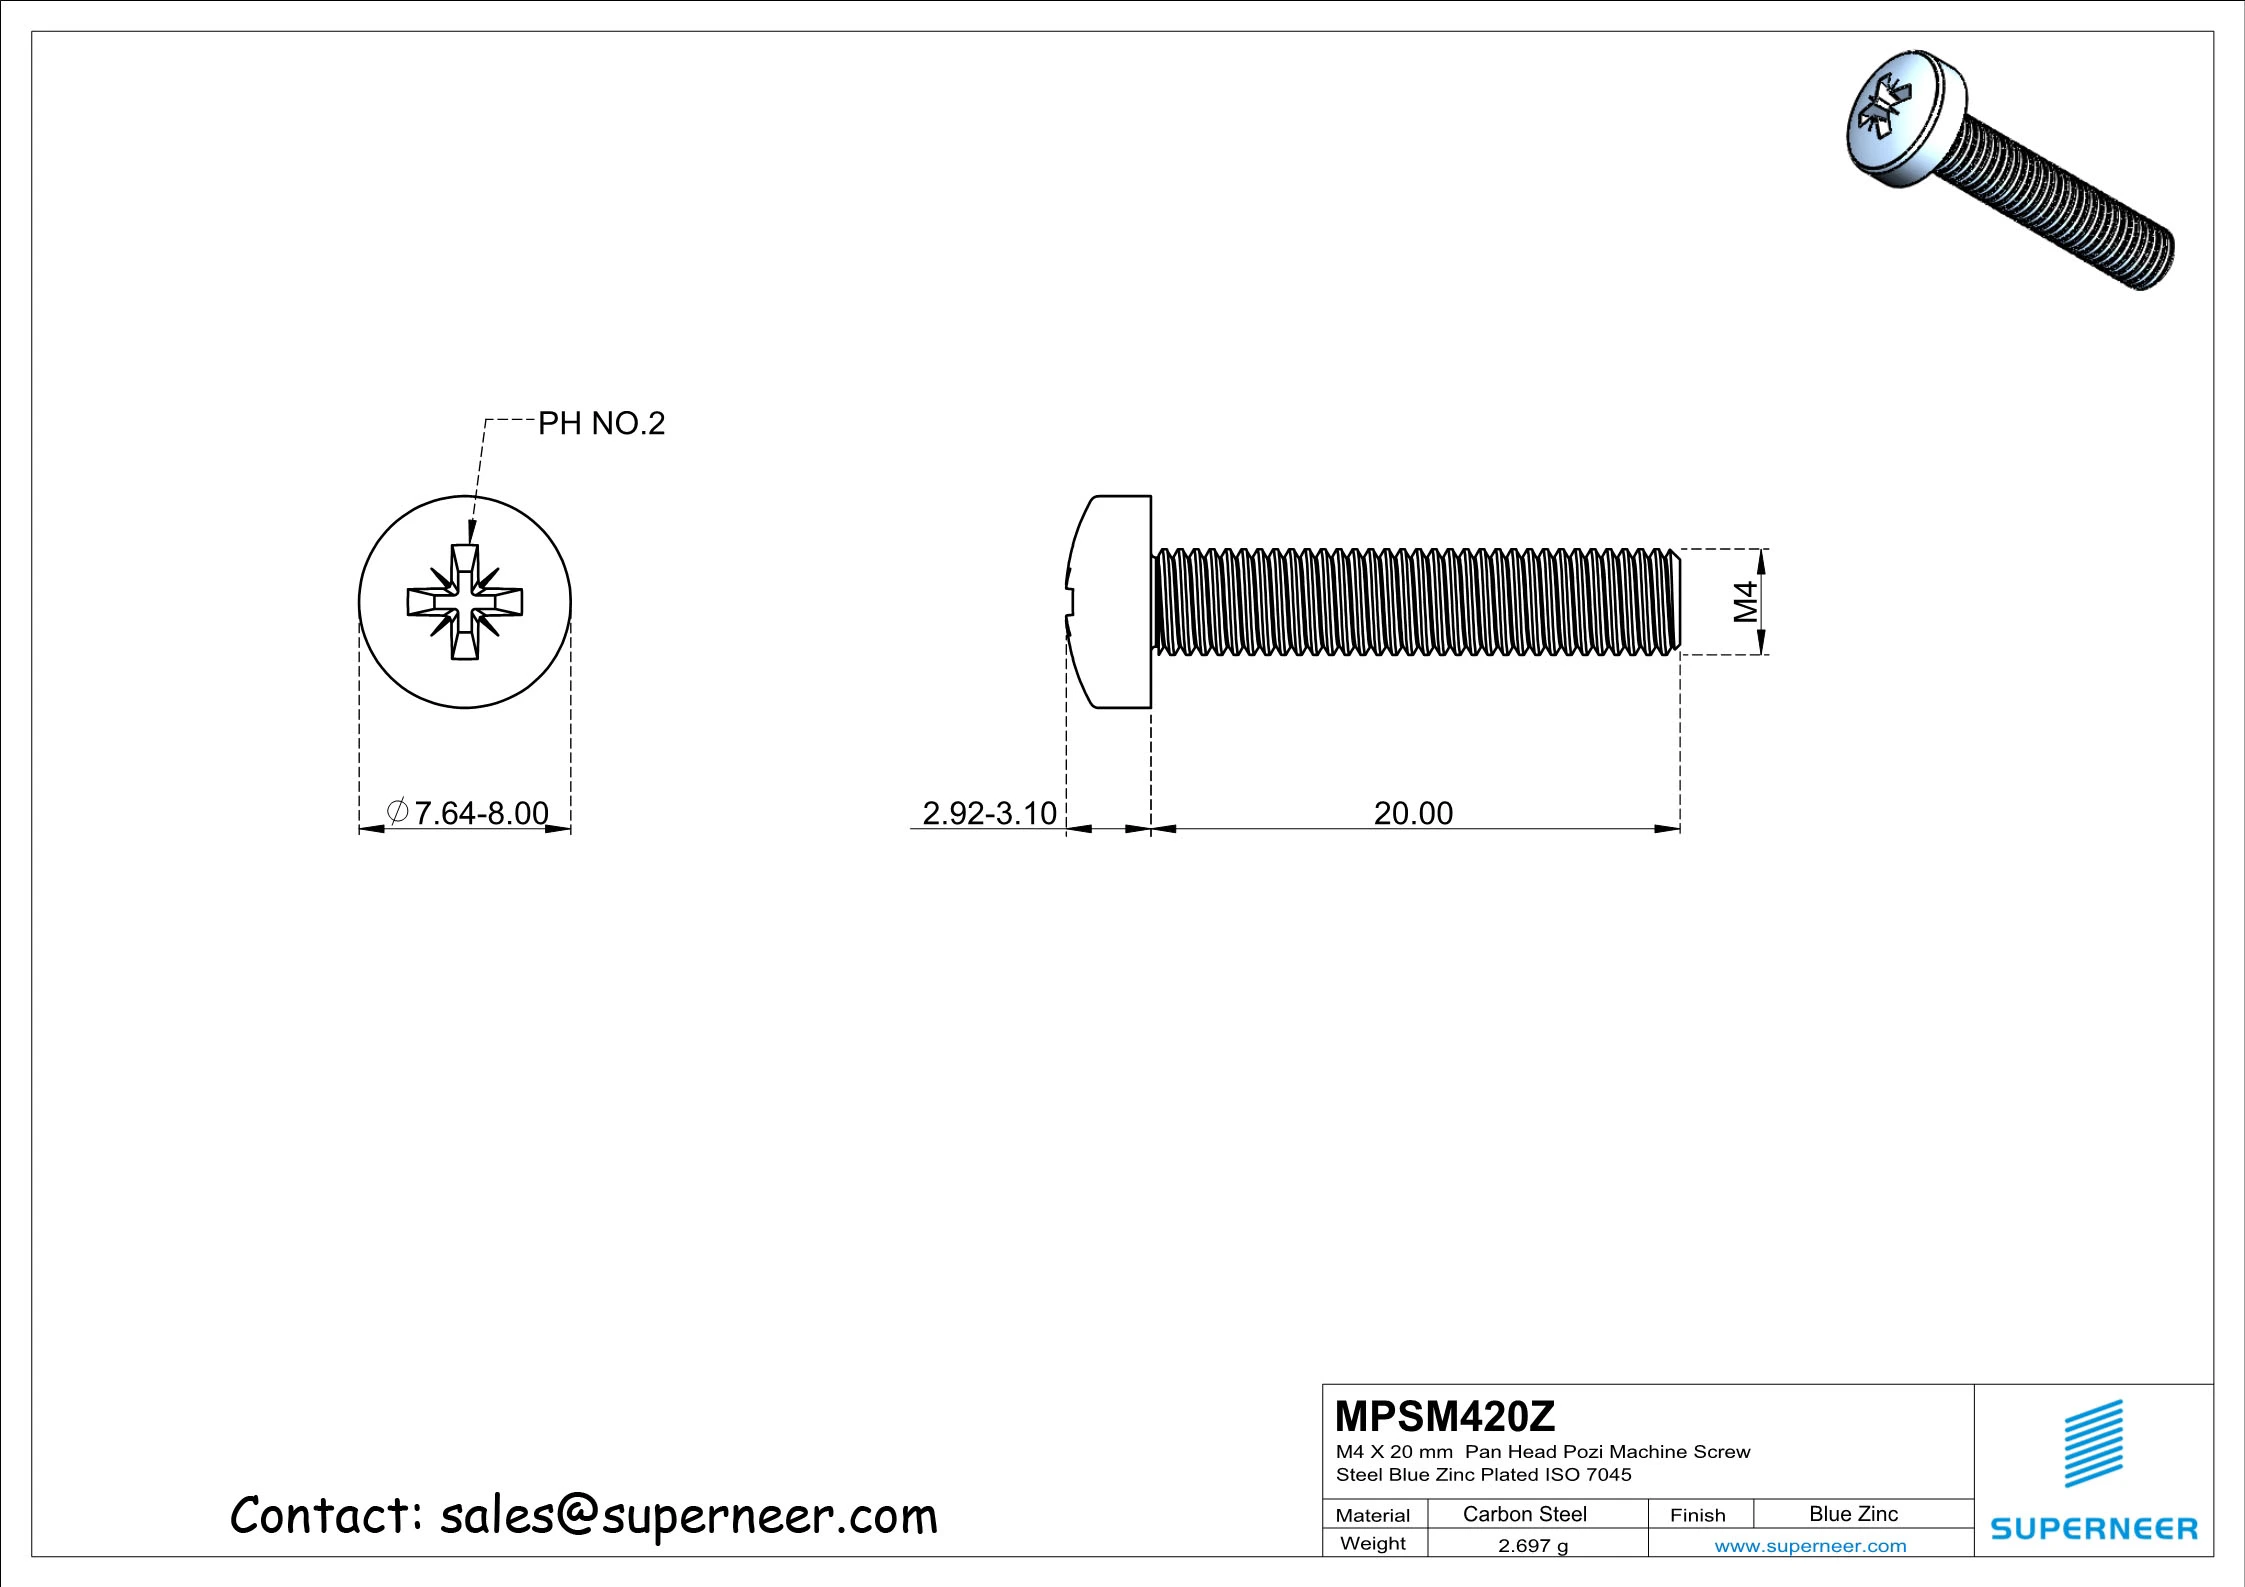 M4 x 20 mm Pan Head Pozi Machine Screw Steel Blue Zinc Plated ISO 7045